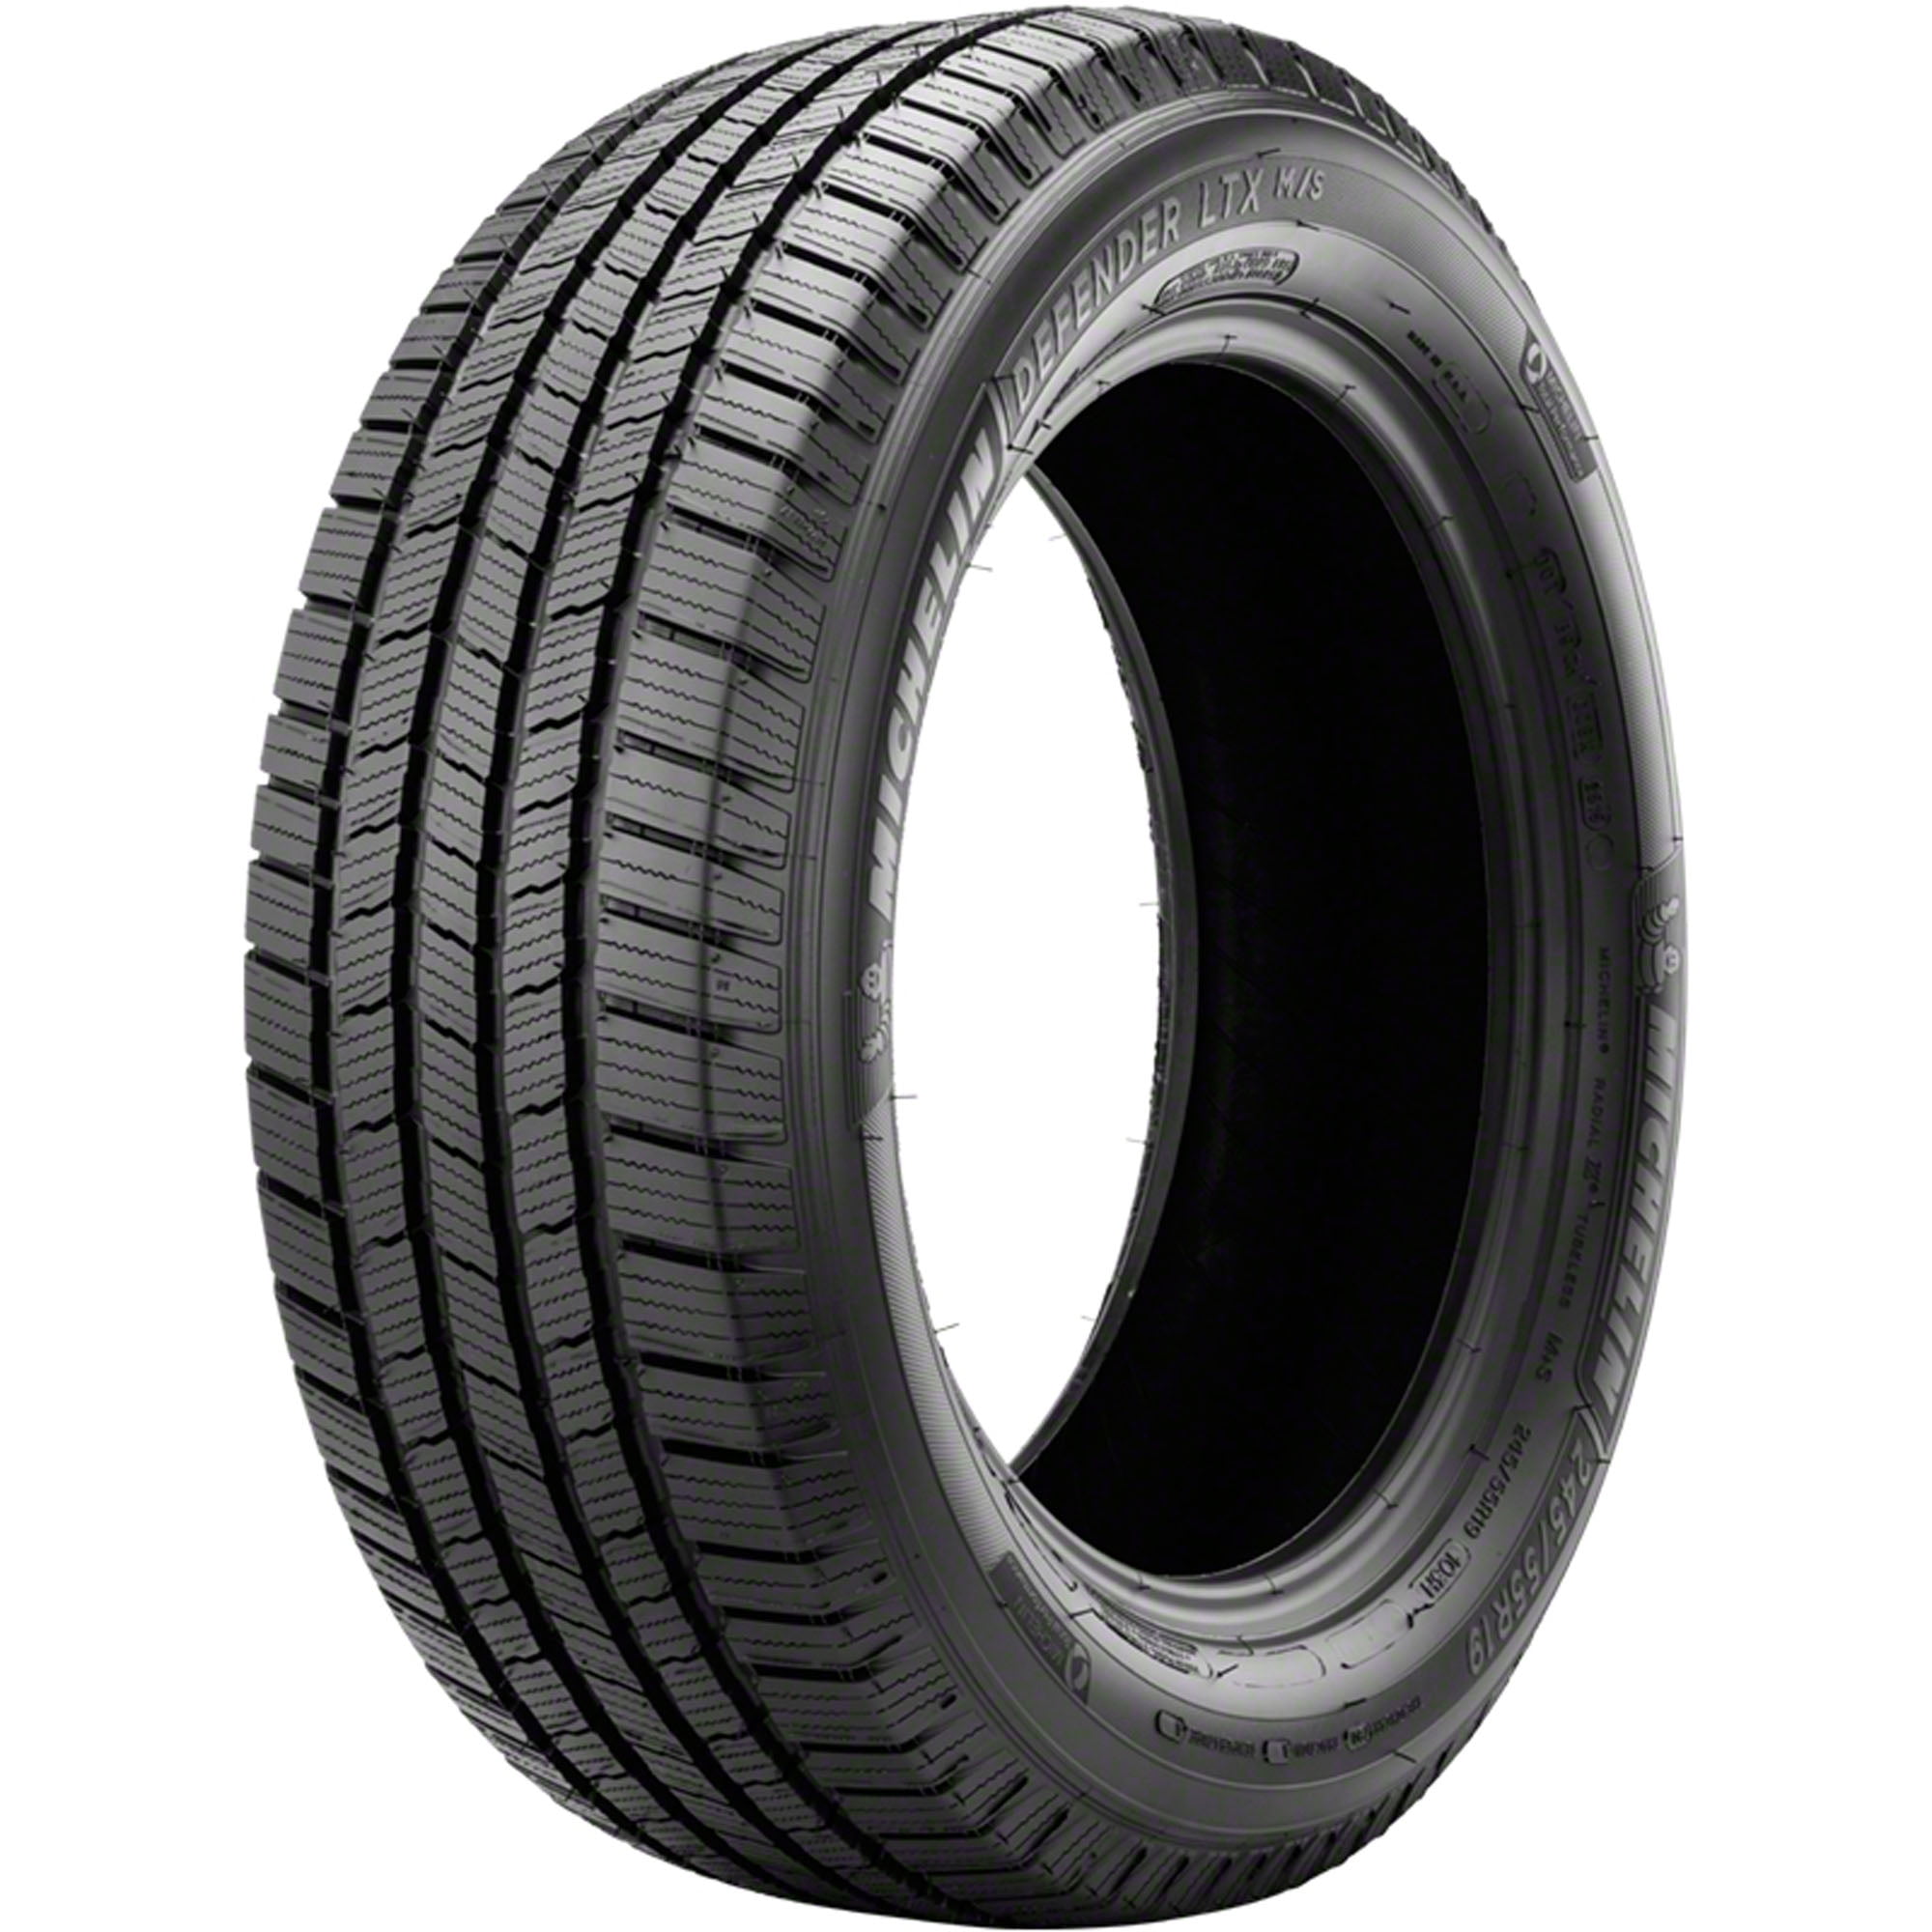 Michelin Pilot Super Sport Summer 205/45ZR17/XL (88Y) Tire Fits: 2017 ...